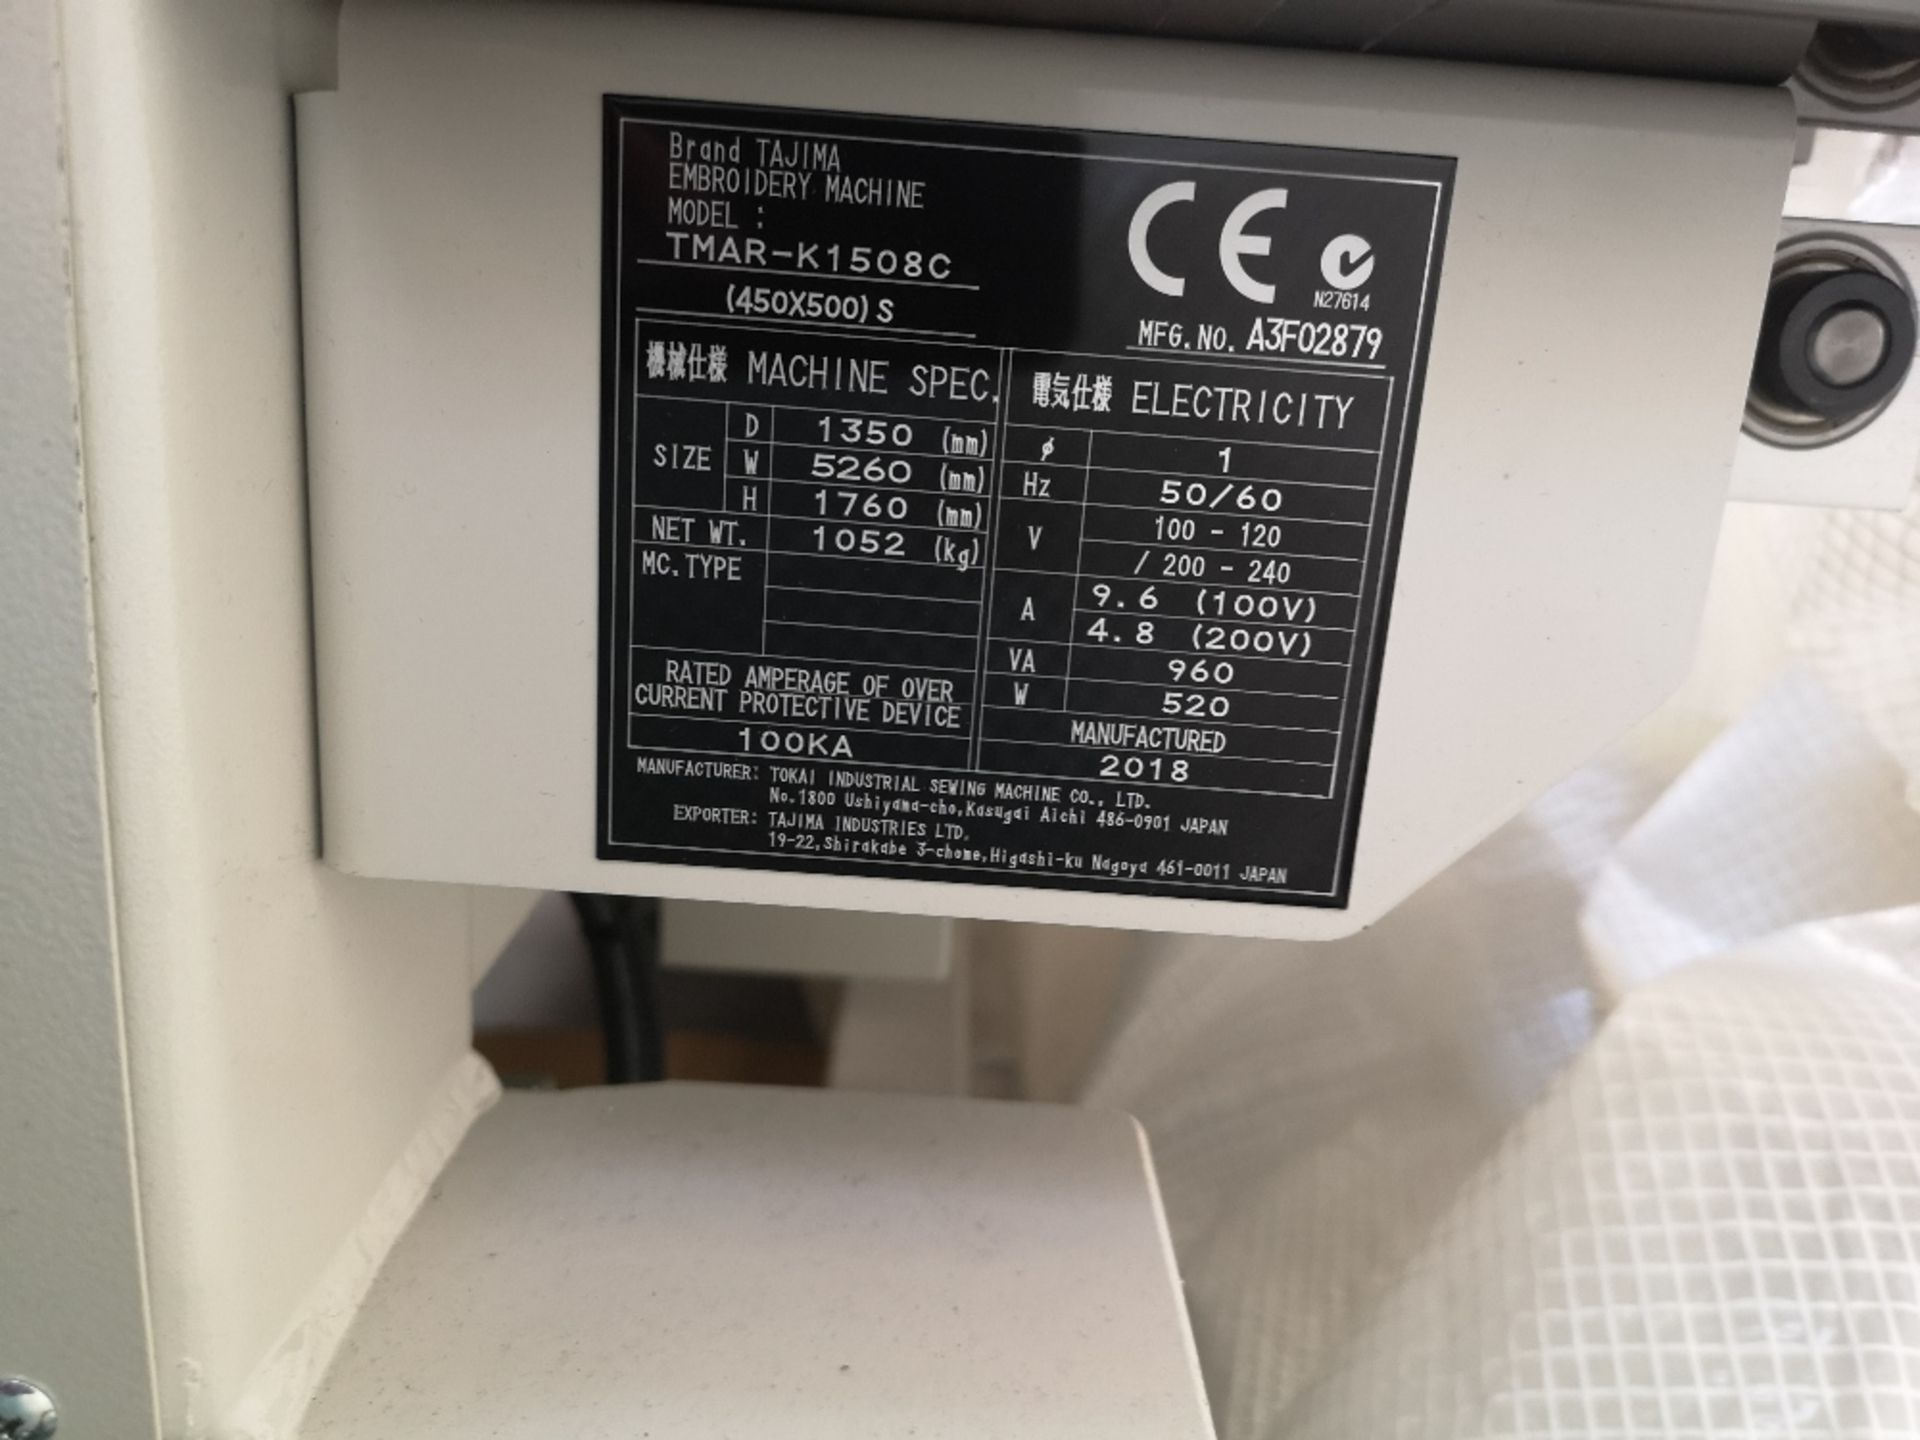 Tajima TMAR-K1508C Electronic Multi Head Automatic Embroidery Machine (2018) - Image 5 of 6